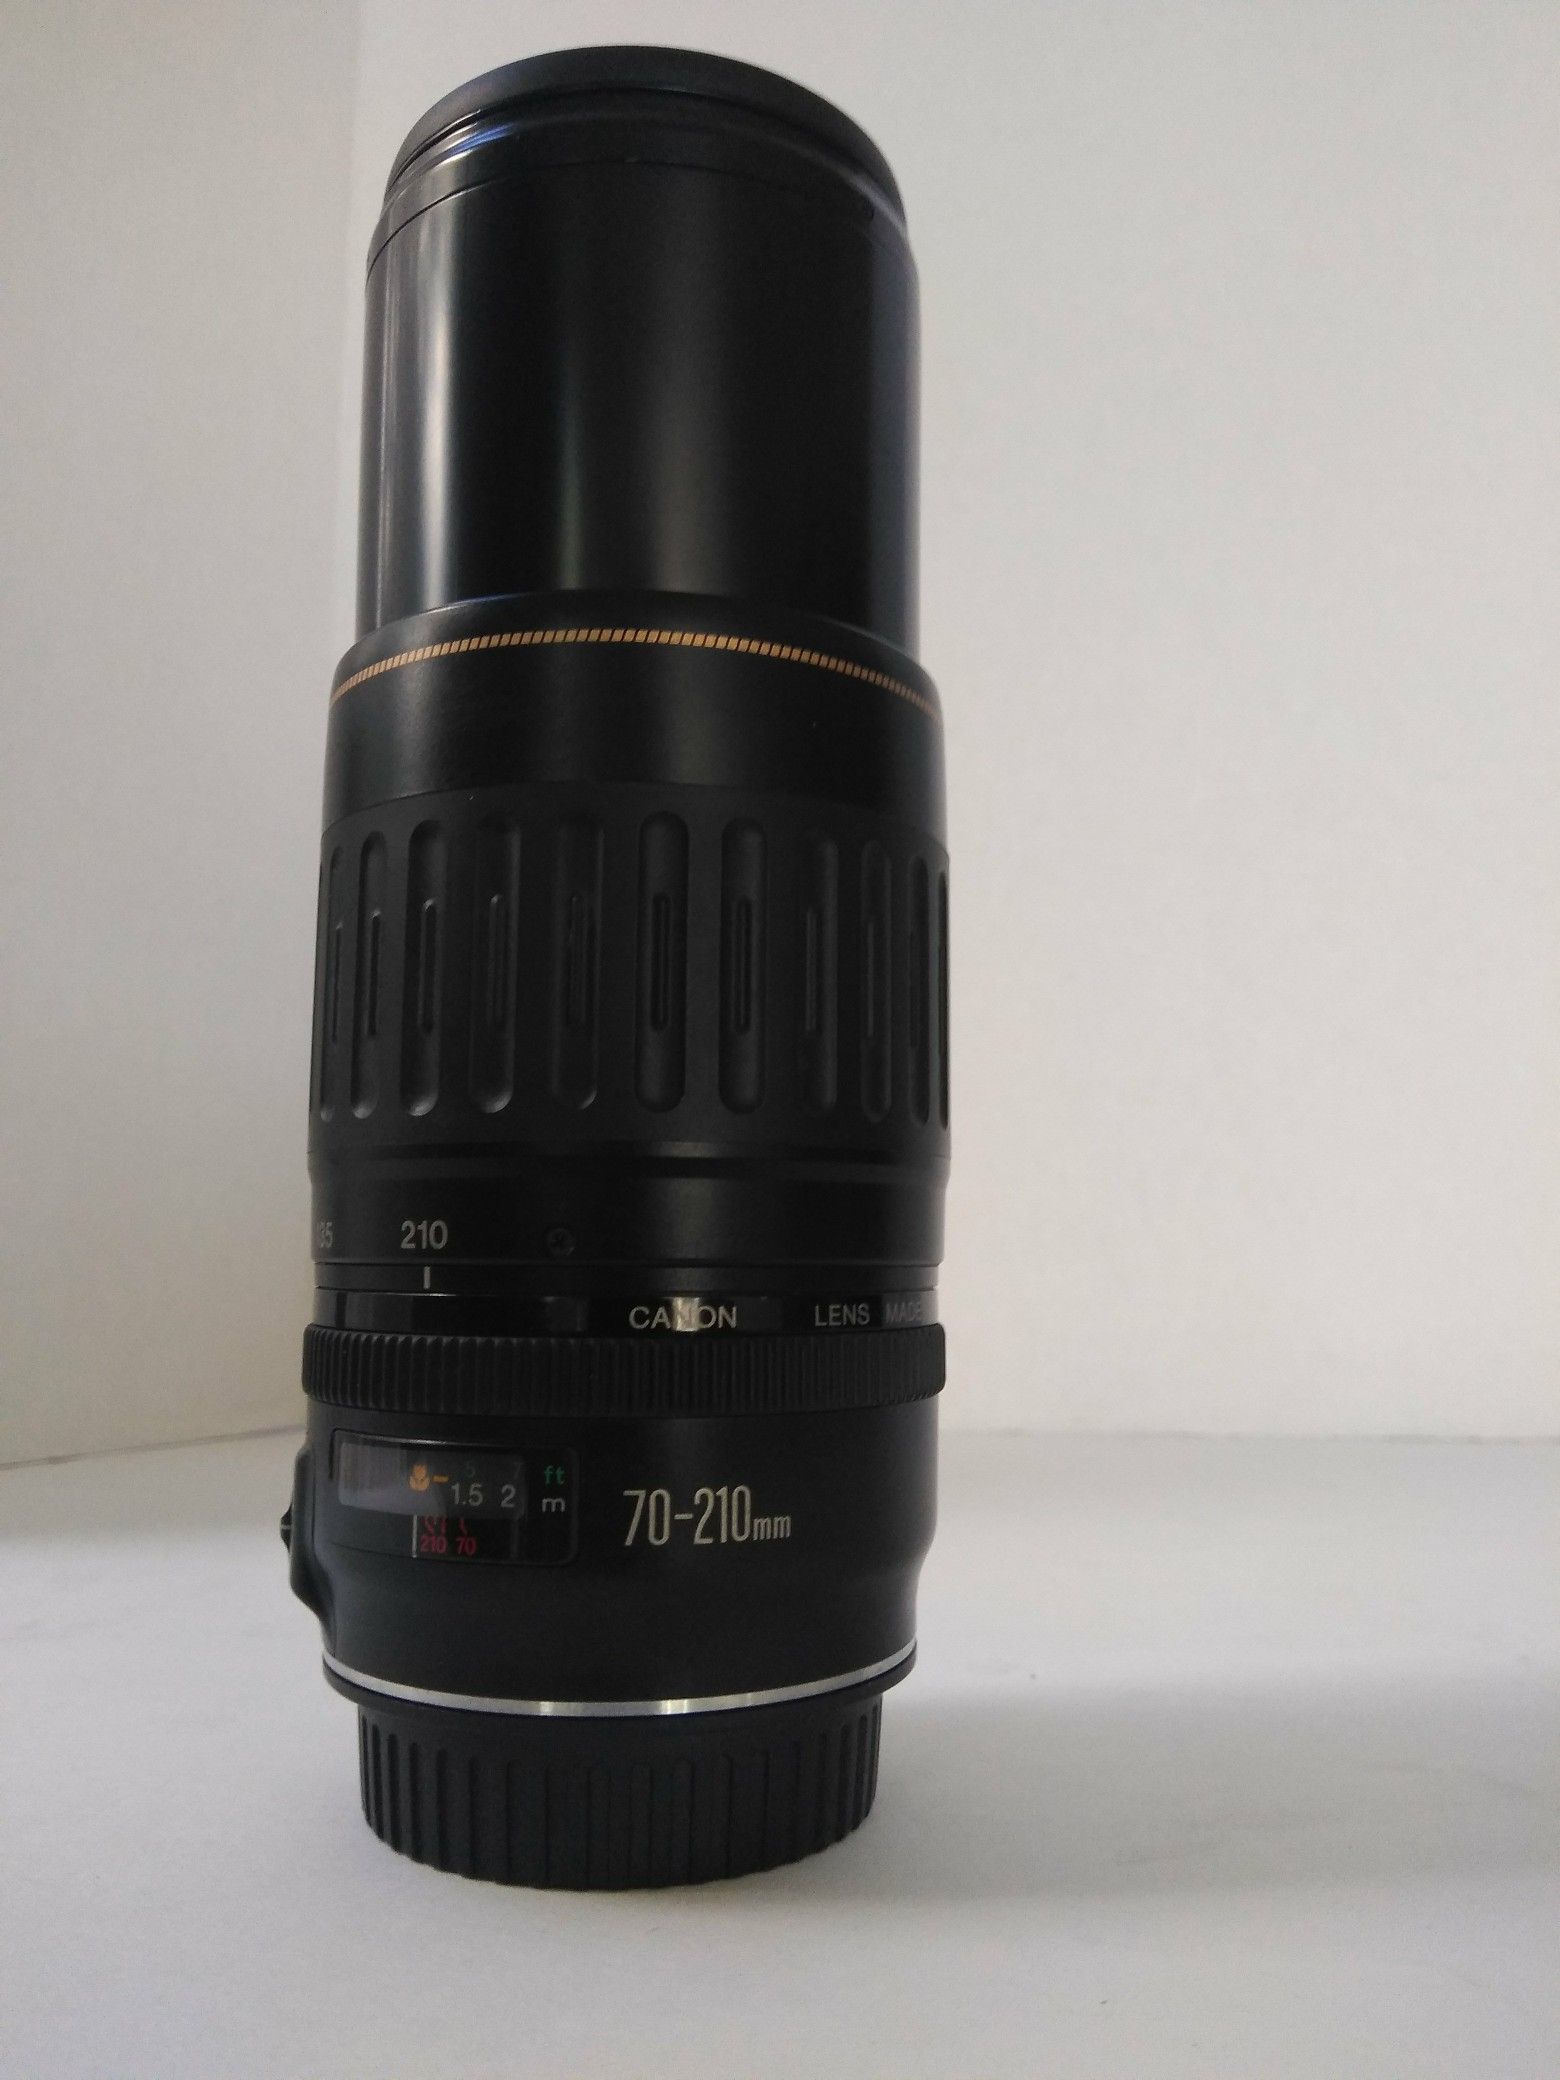 Canon 70-210mm lens for film or digital camera